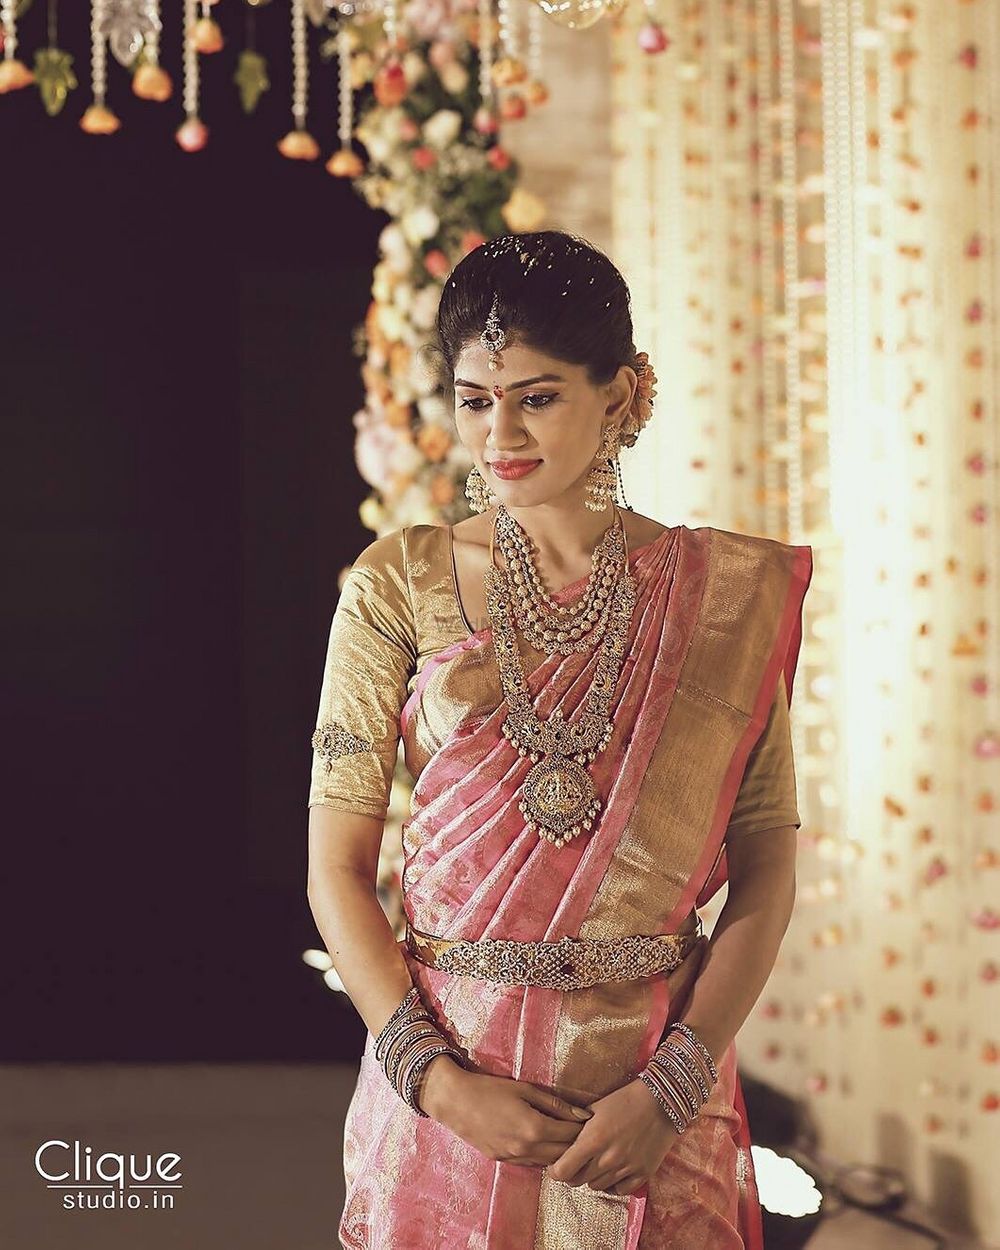 Photo of South Indian bride wearing silver jewellery with pink kanjivaram